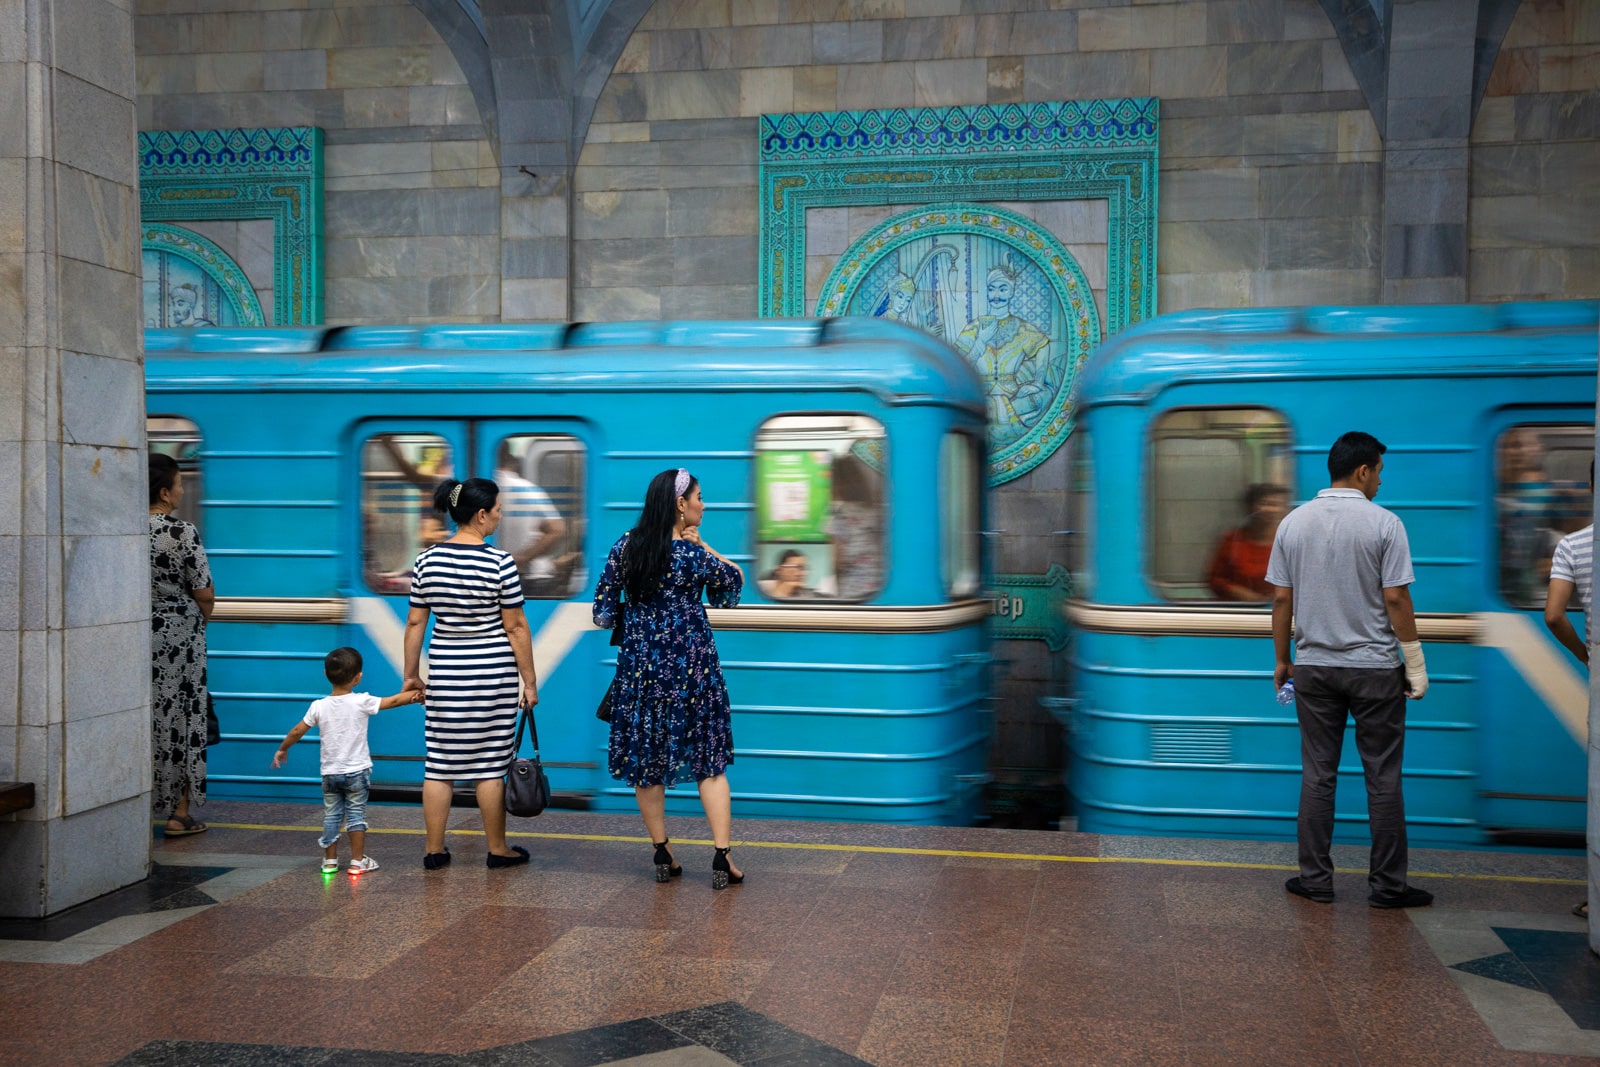 Metro train arriving in Alisher Navoi metro station in Tashkent, Uzbekistan